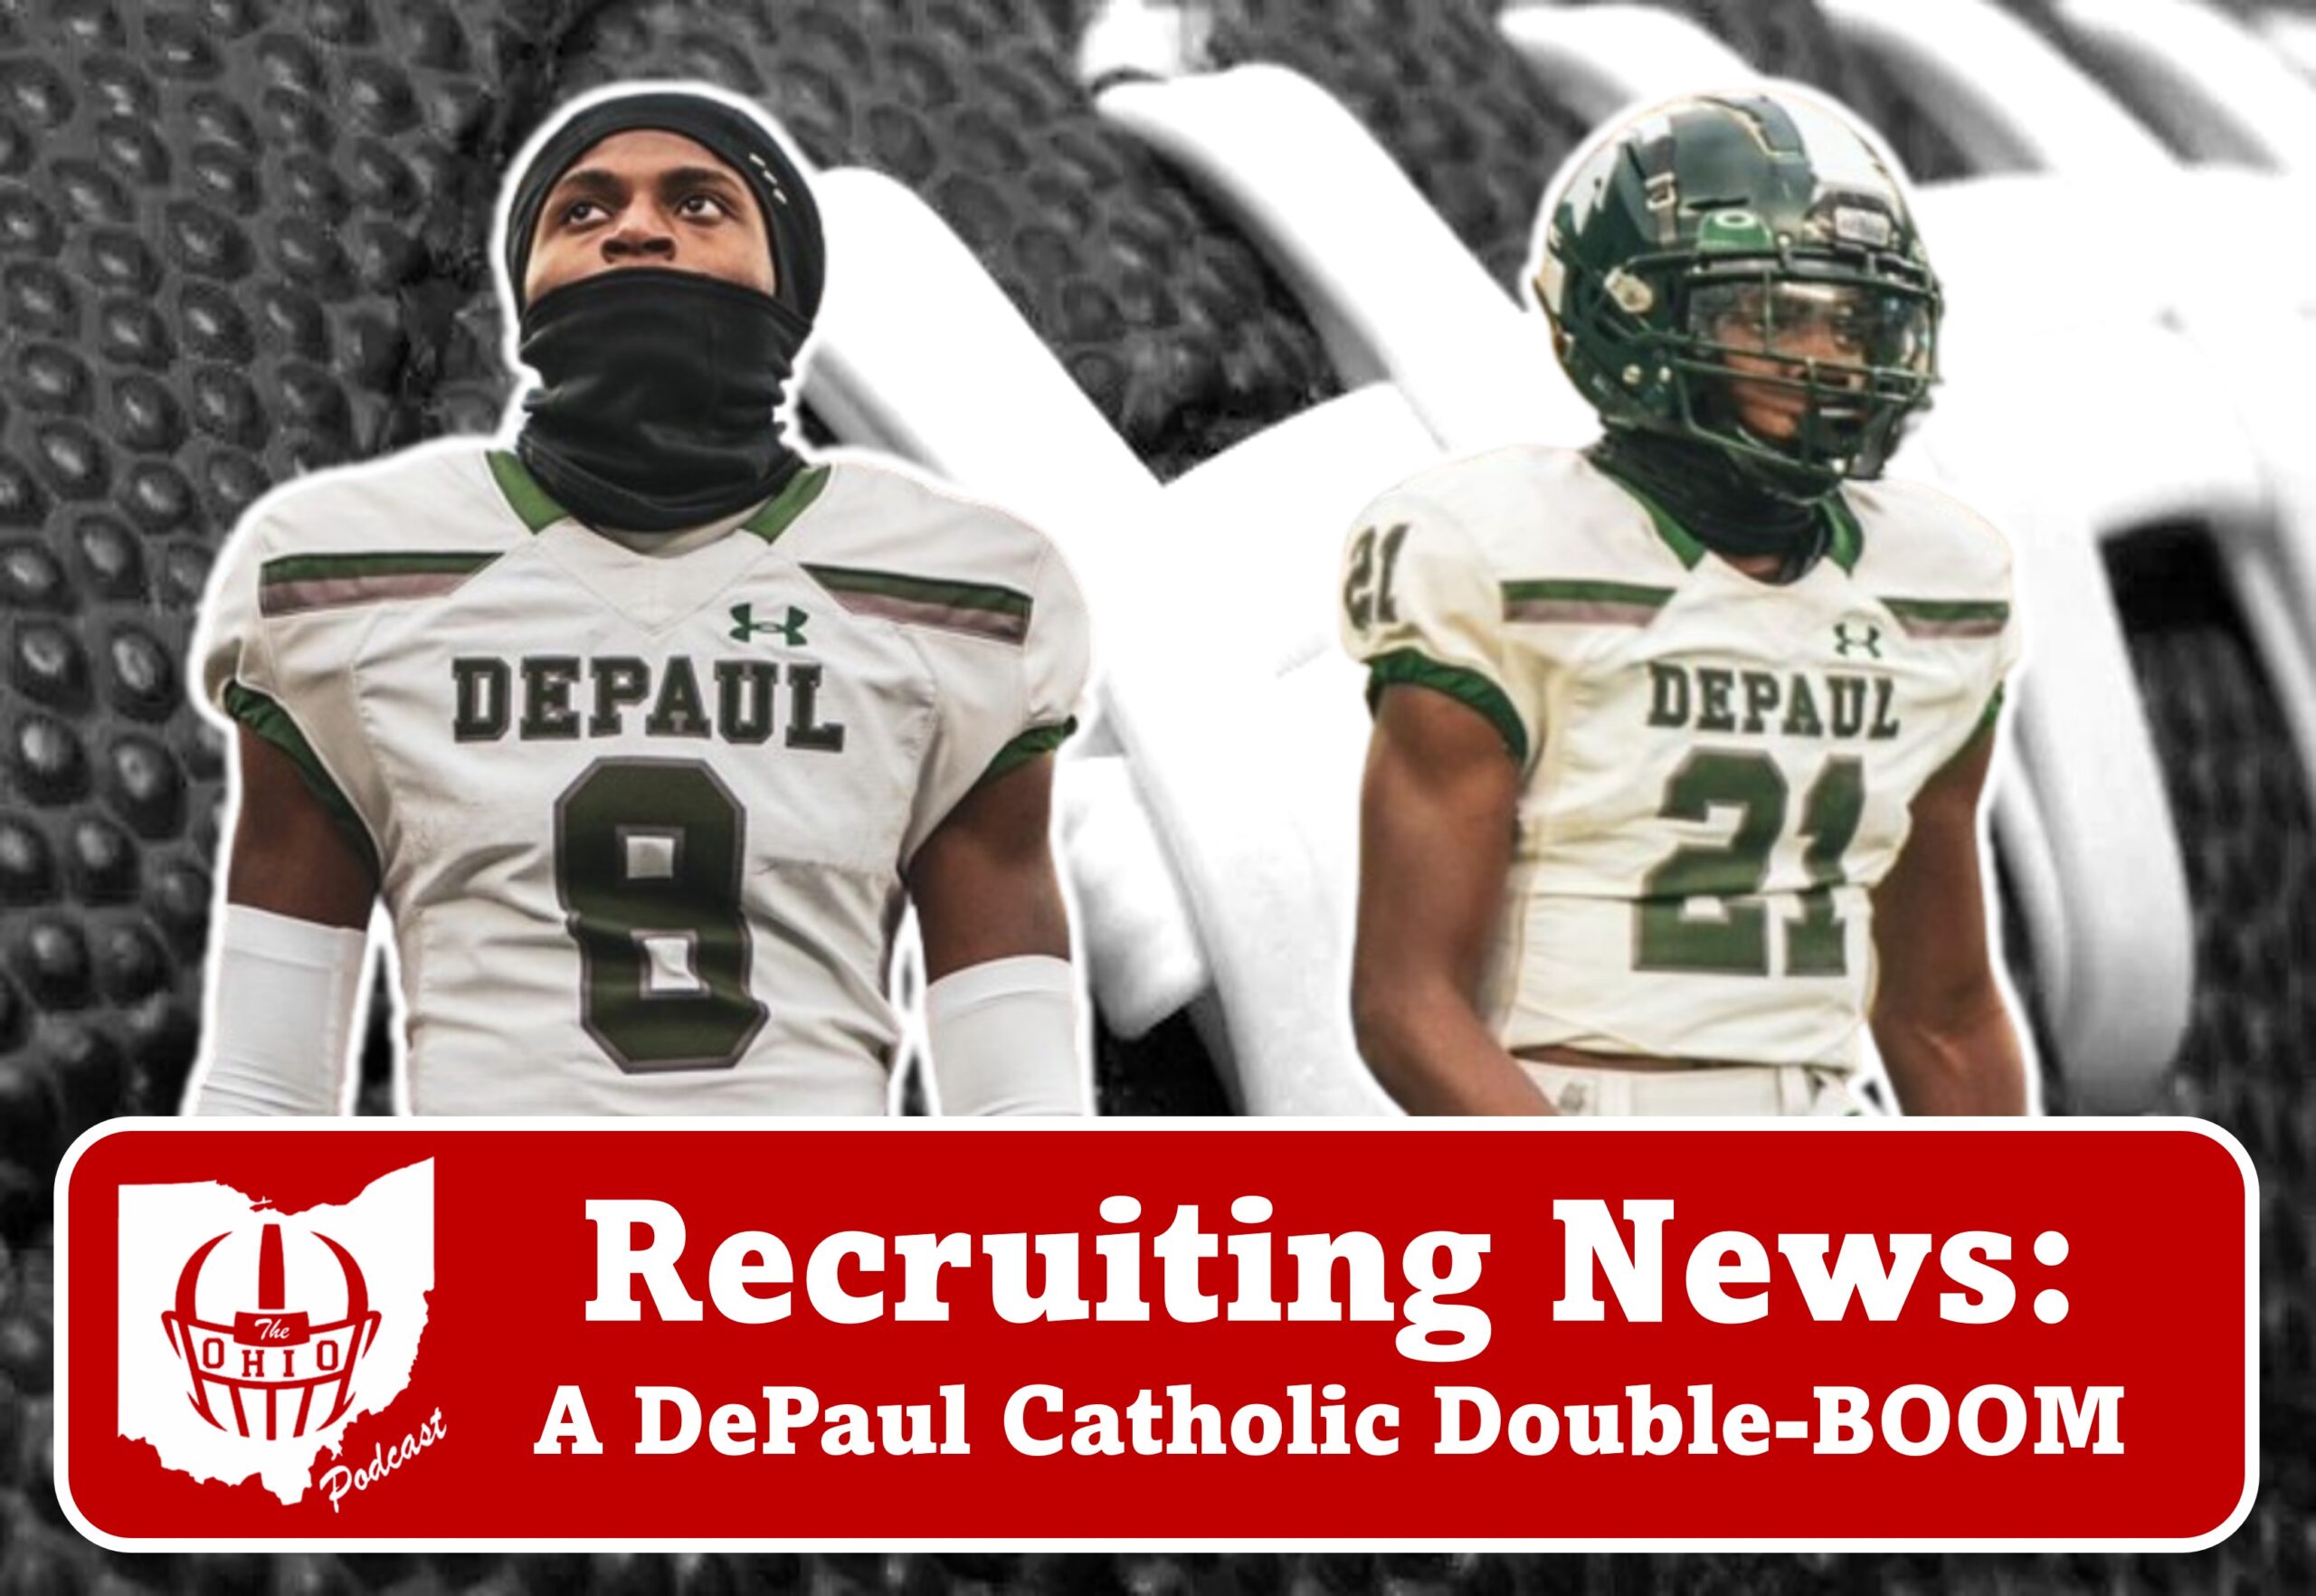 Ohio State Continues Hot Recruiting Streak with DePaul Catholic Duo